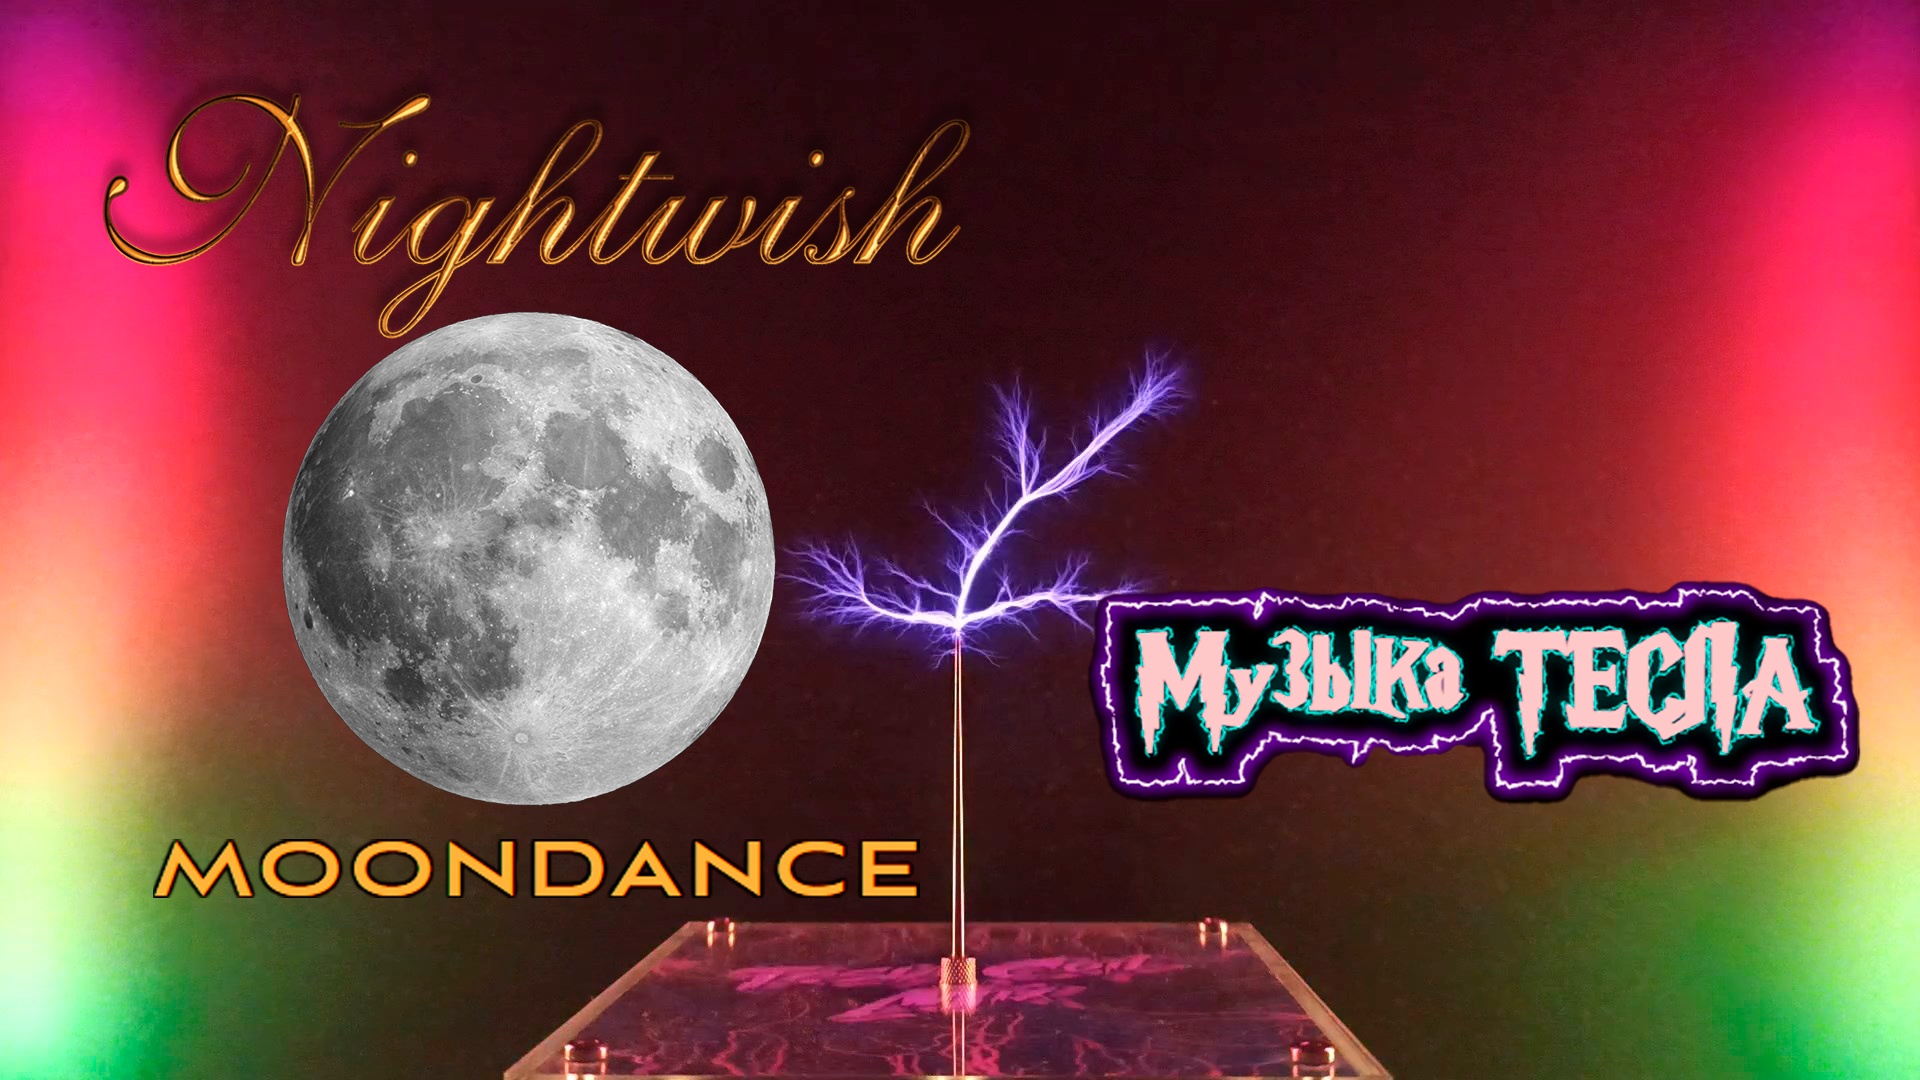 Moondance - Nightwish Tesla Coil Mix #музыкатесла